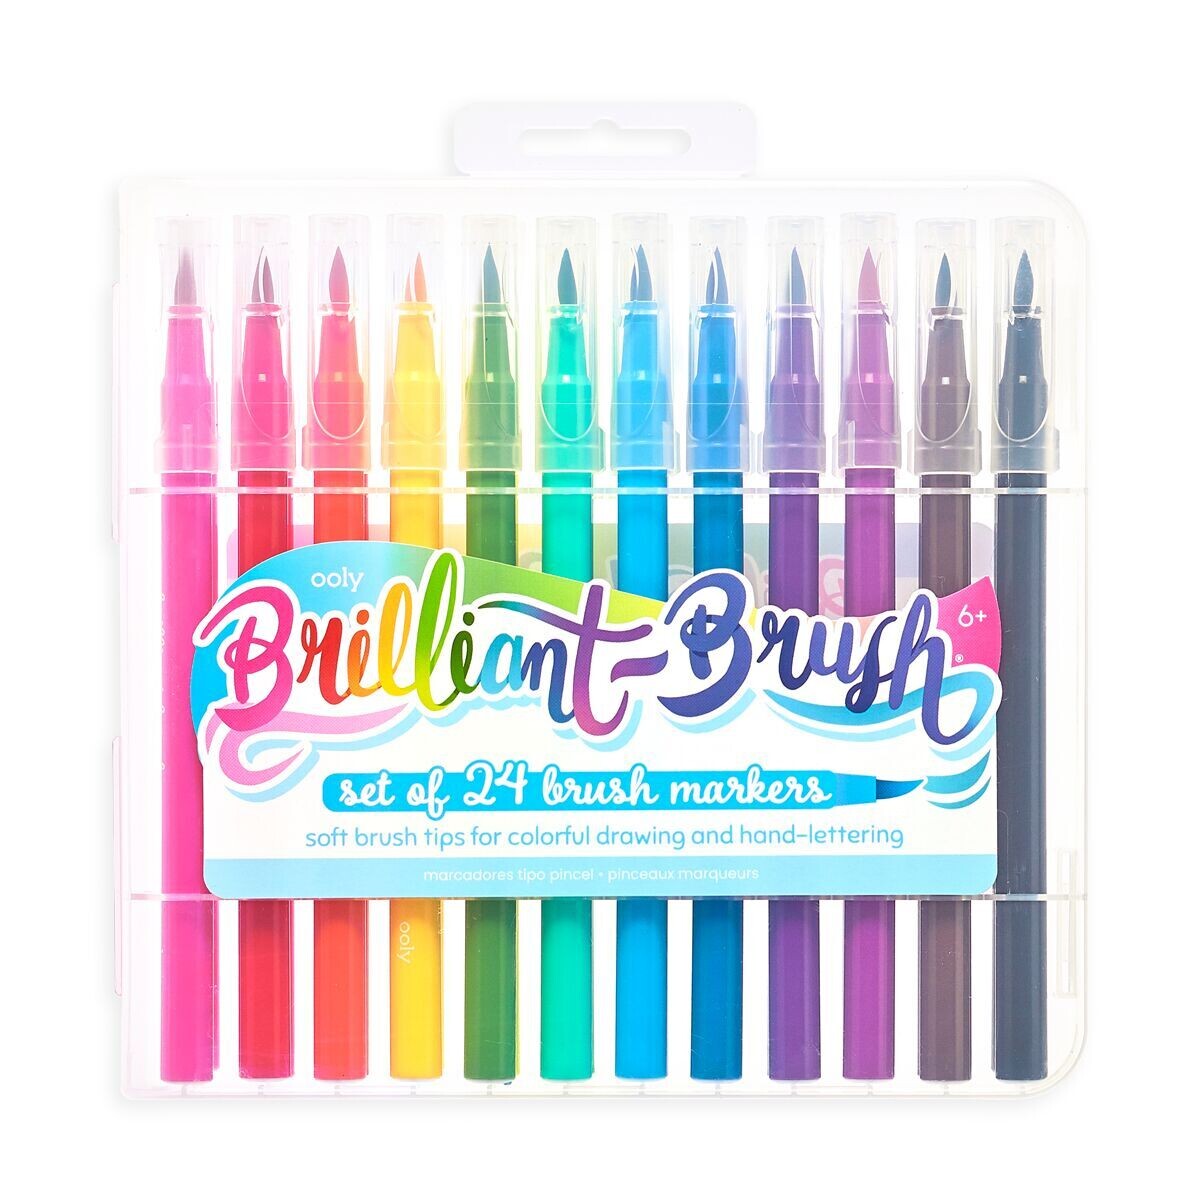 Brilliant-Brush Markers